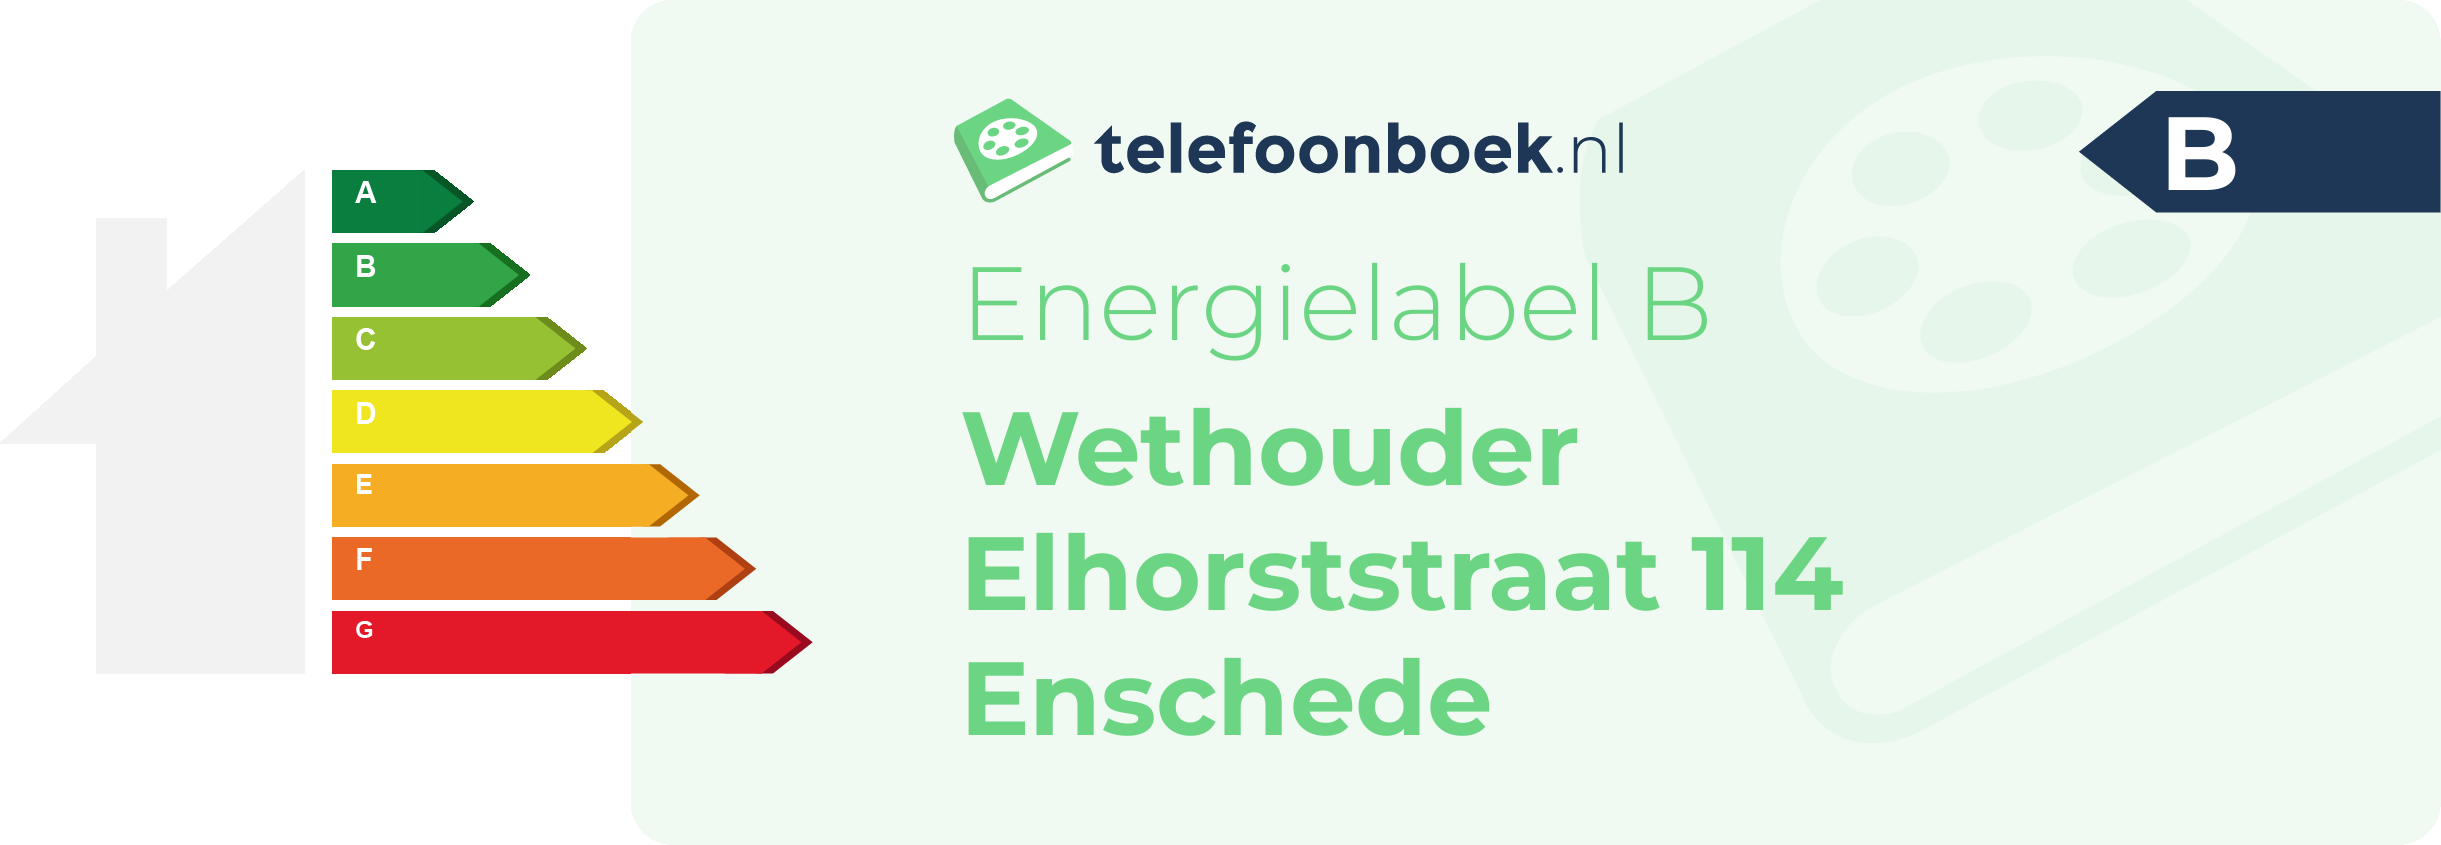 Energielabel Wethouder Elhorststraat 114 Enschede